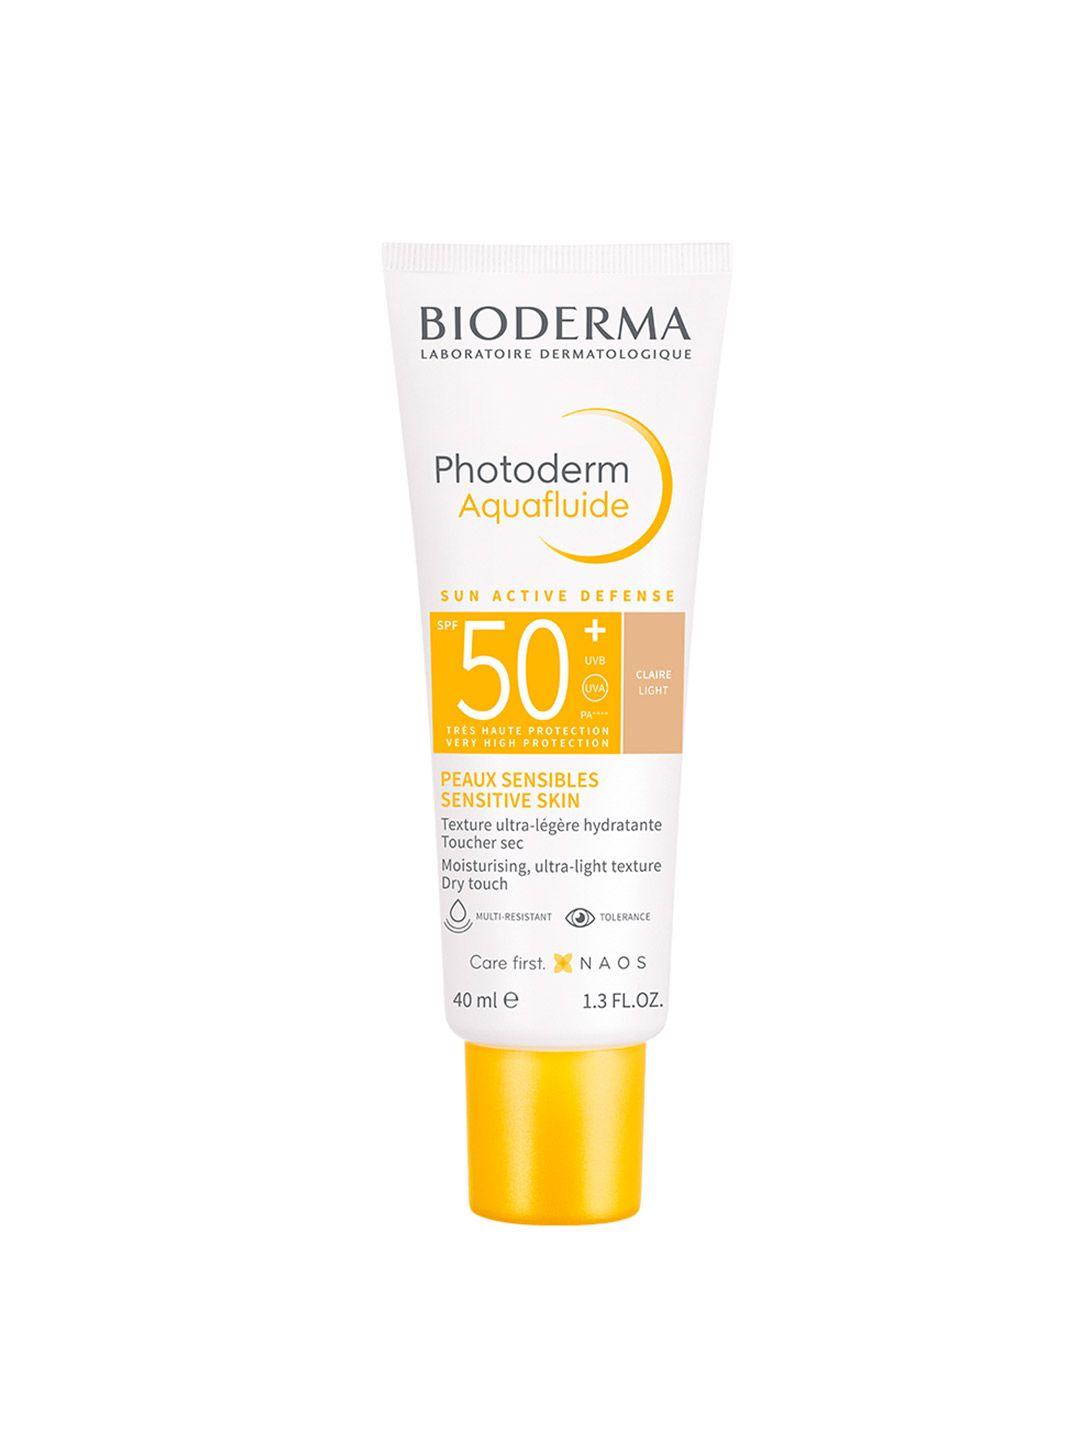 bioderma-photoderm-max-aquafluide-light-shade-sunscreen-spf-50+---40ml